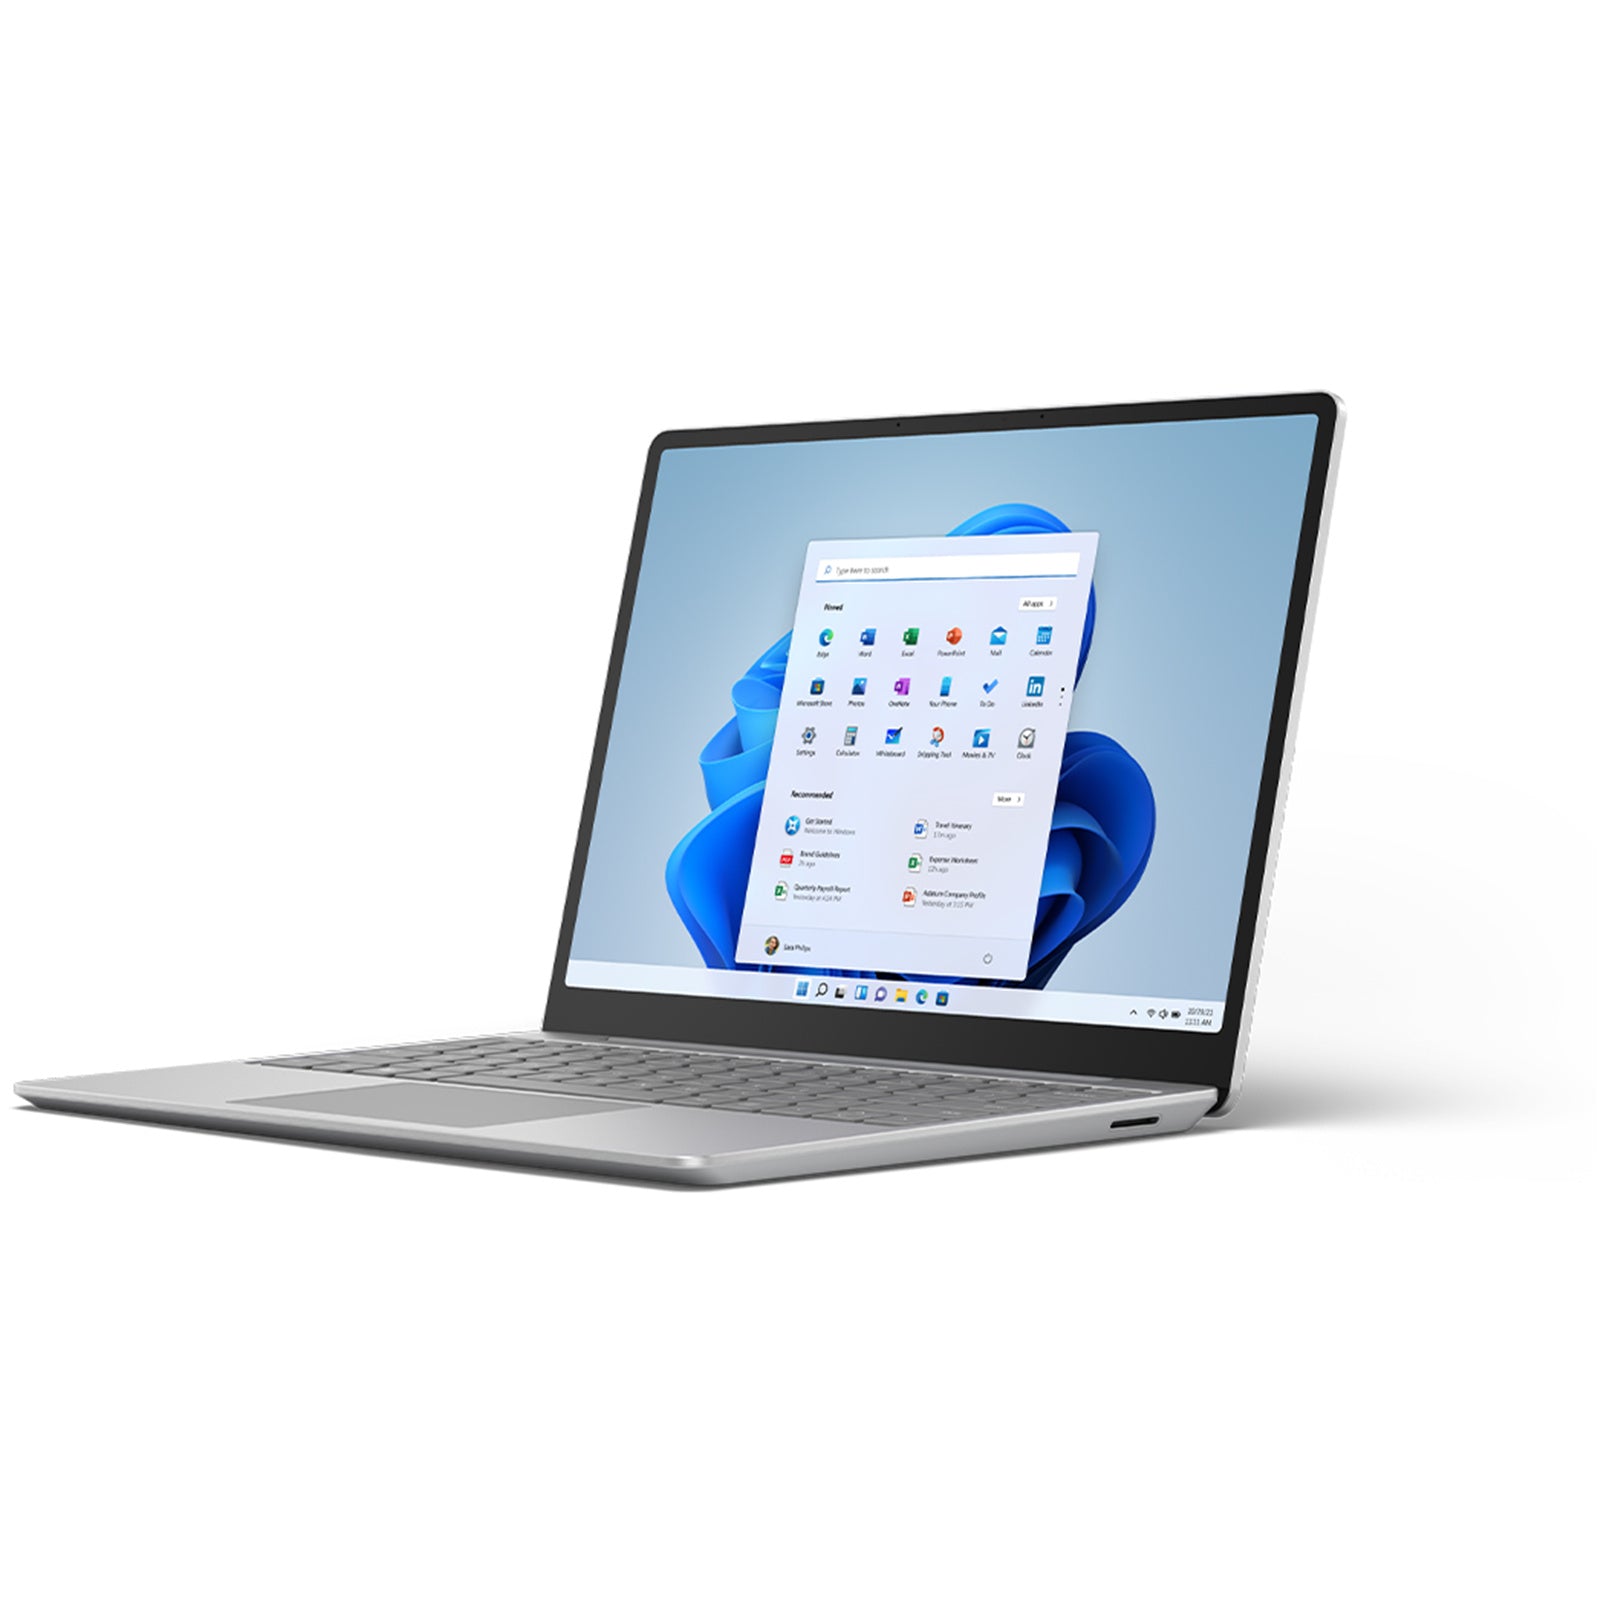 Microsoft Surface Laptop 2 (Silver), i5-8350u, 8GB, 128GB NVMe SSD